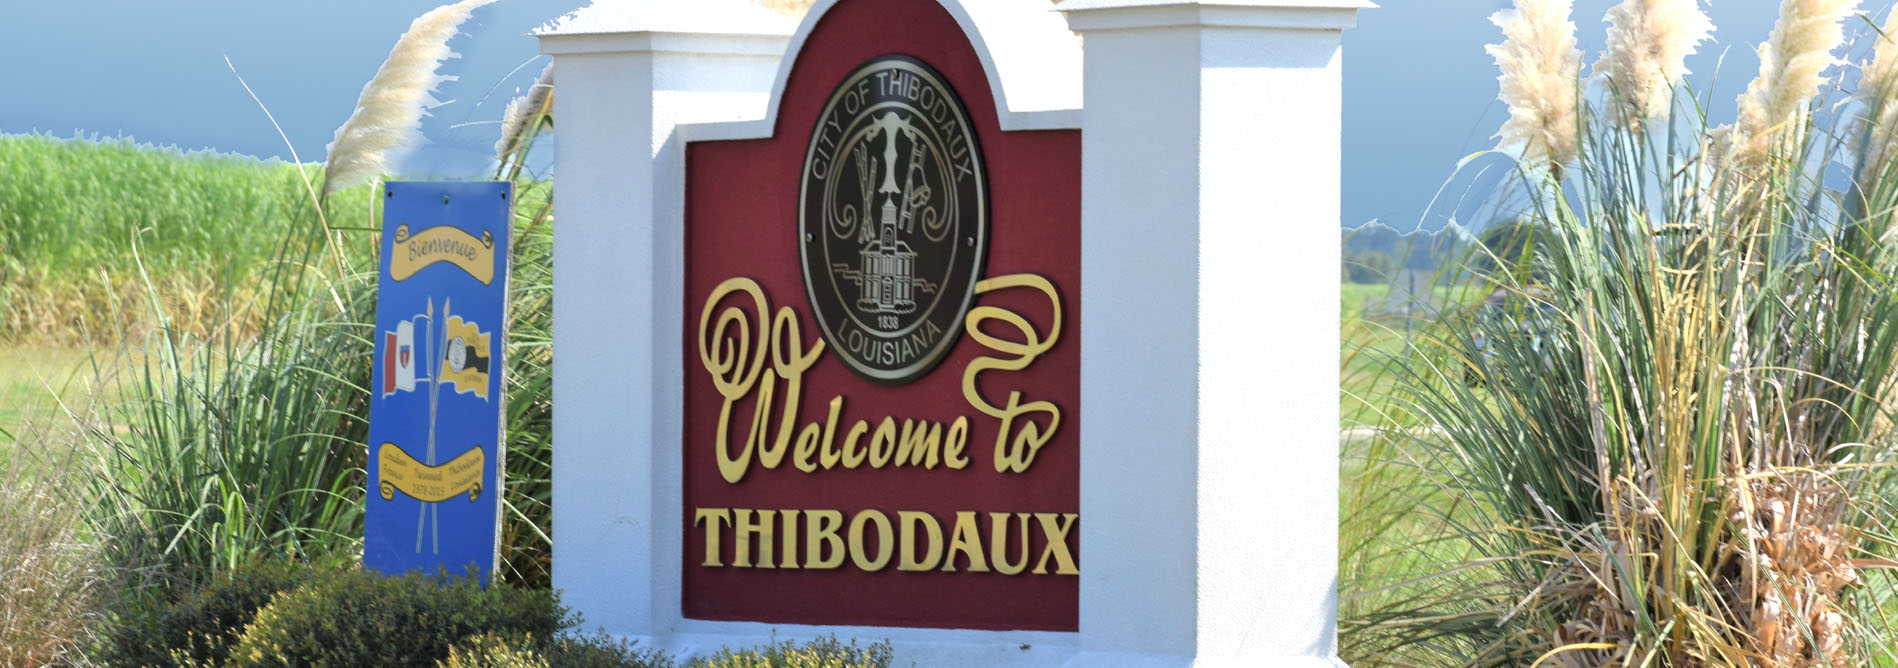 Welcome to Thibodaux